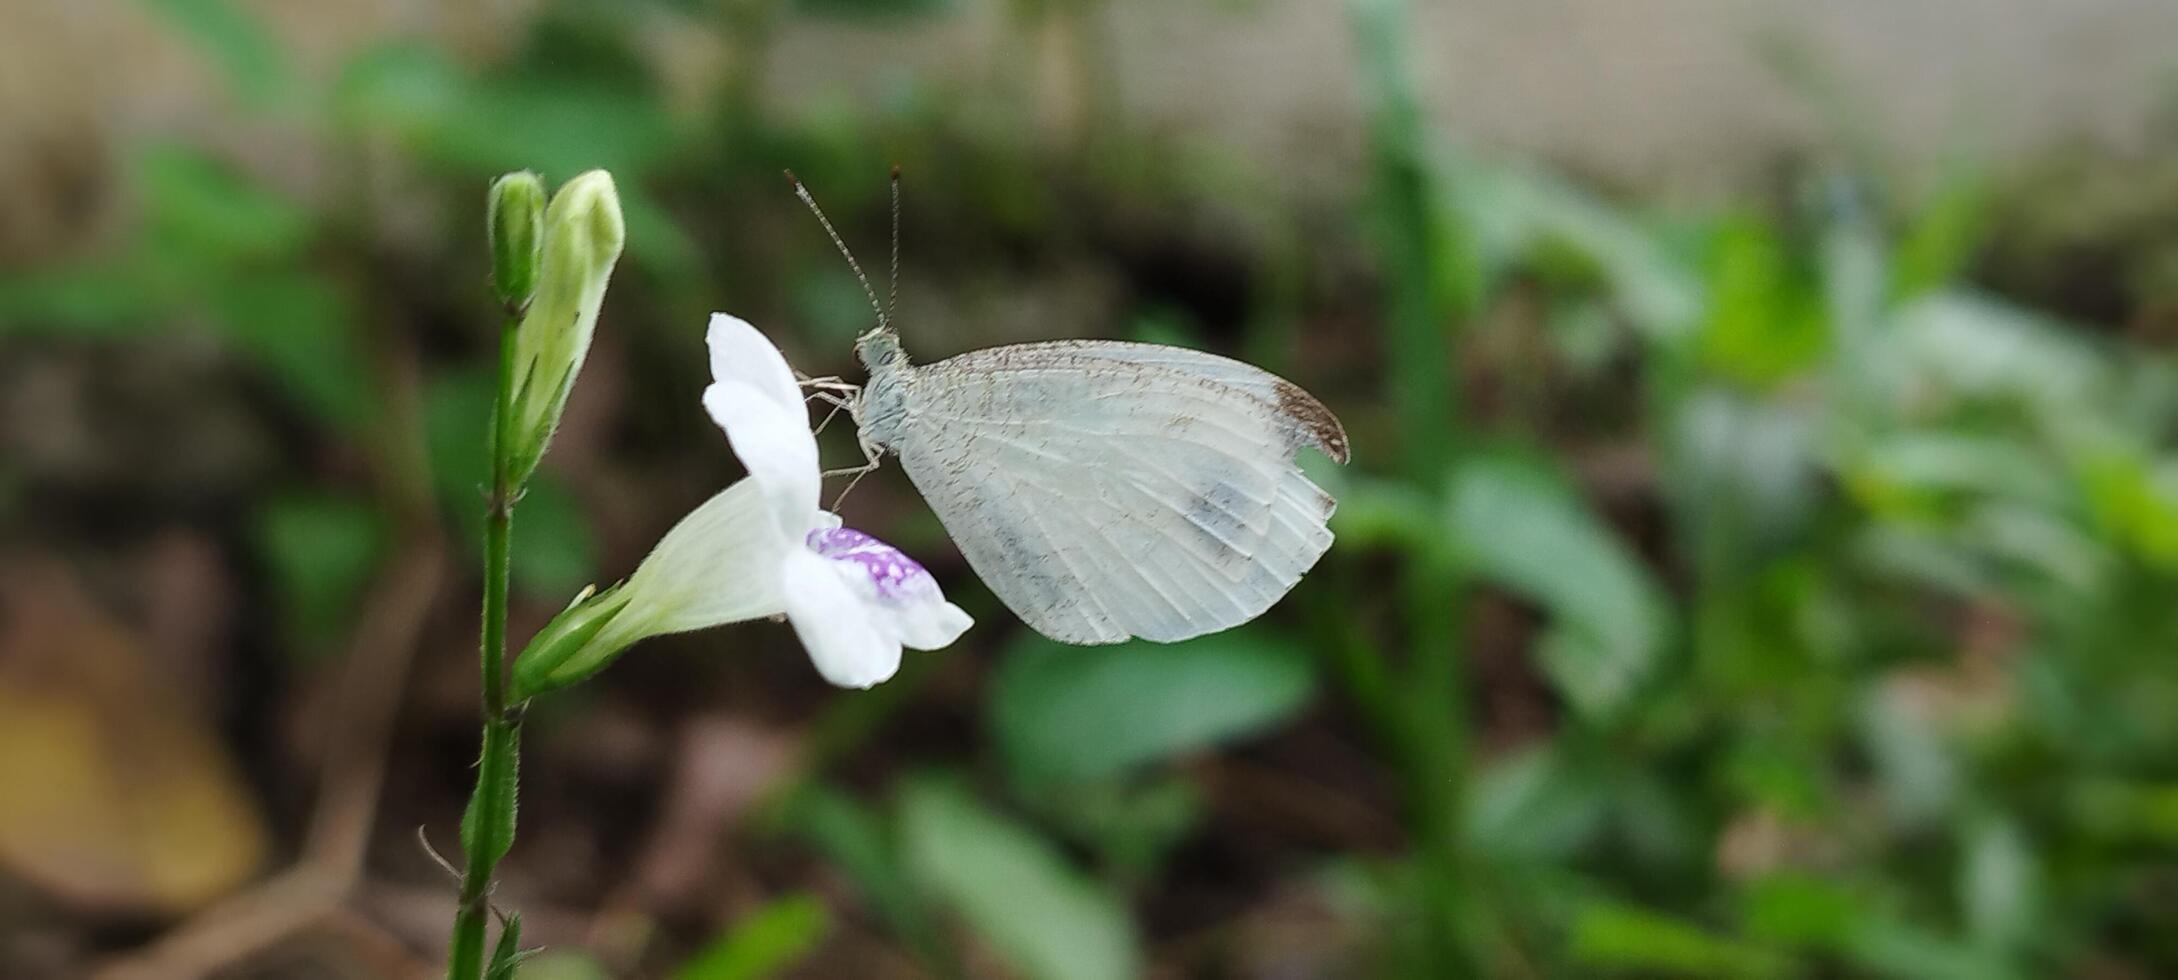 klein wit bloemen besmet met wit vlinders foto